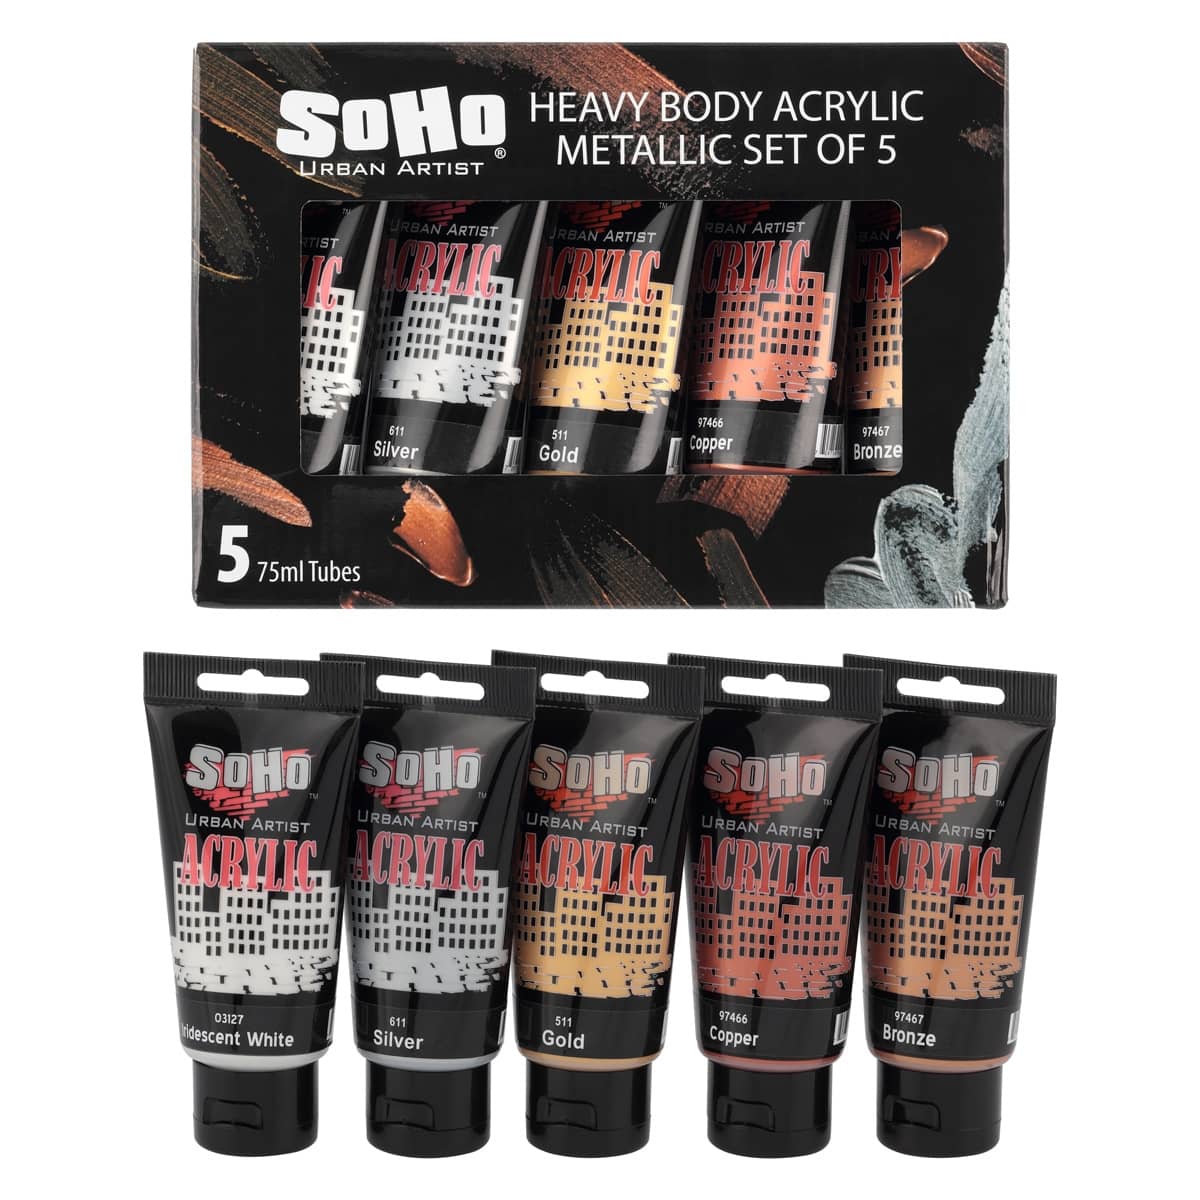 SoHo Artists Heavy Body Acrylics - Metallic Colors Set of 5, 75ml Tubes